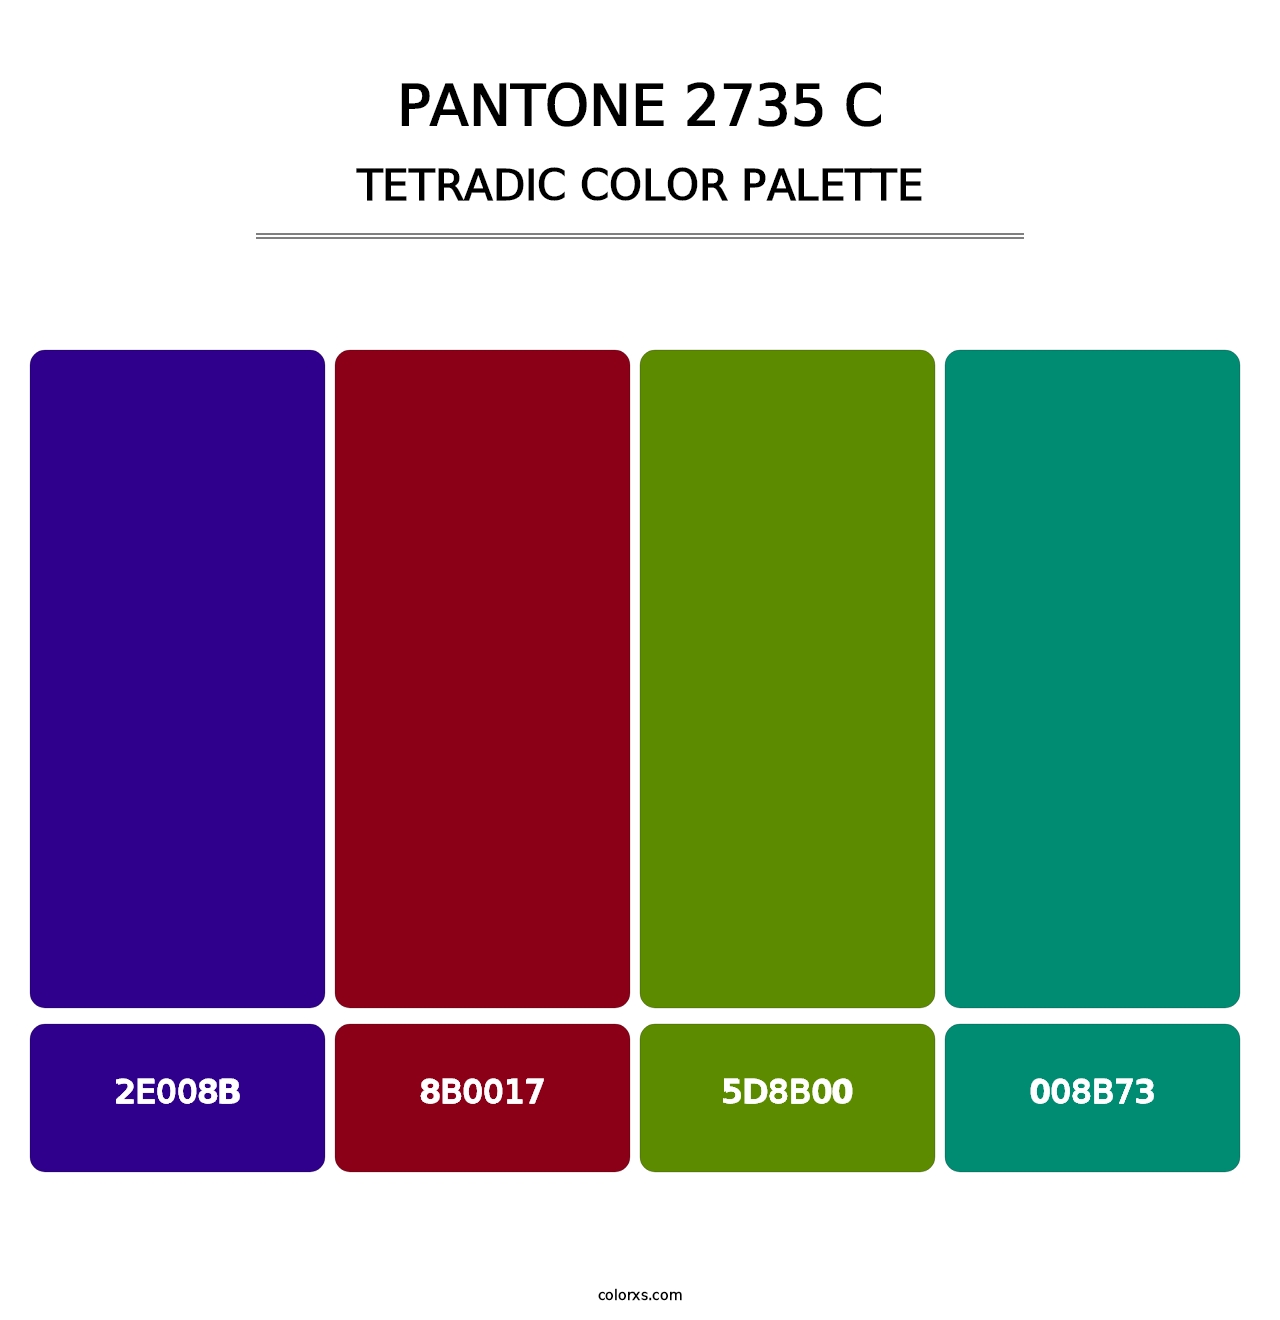 PANTONE 2735 C - Tetradic Color Palette